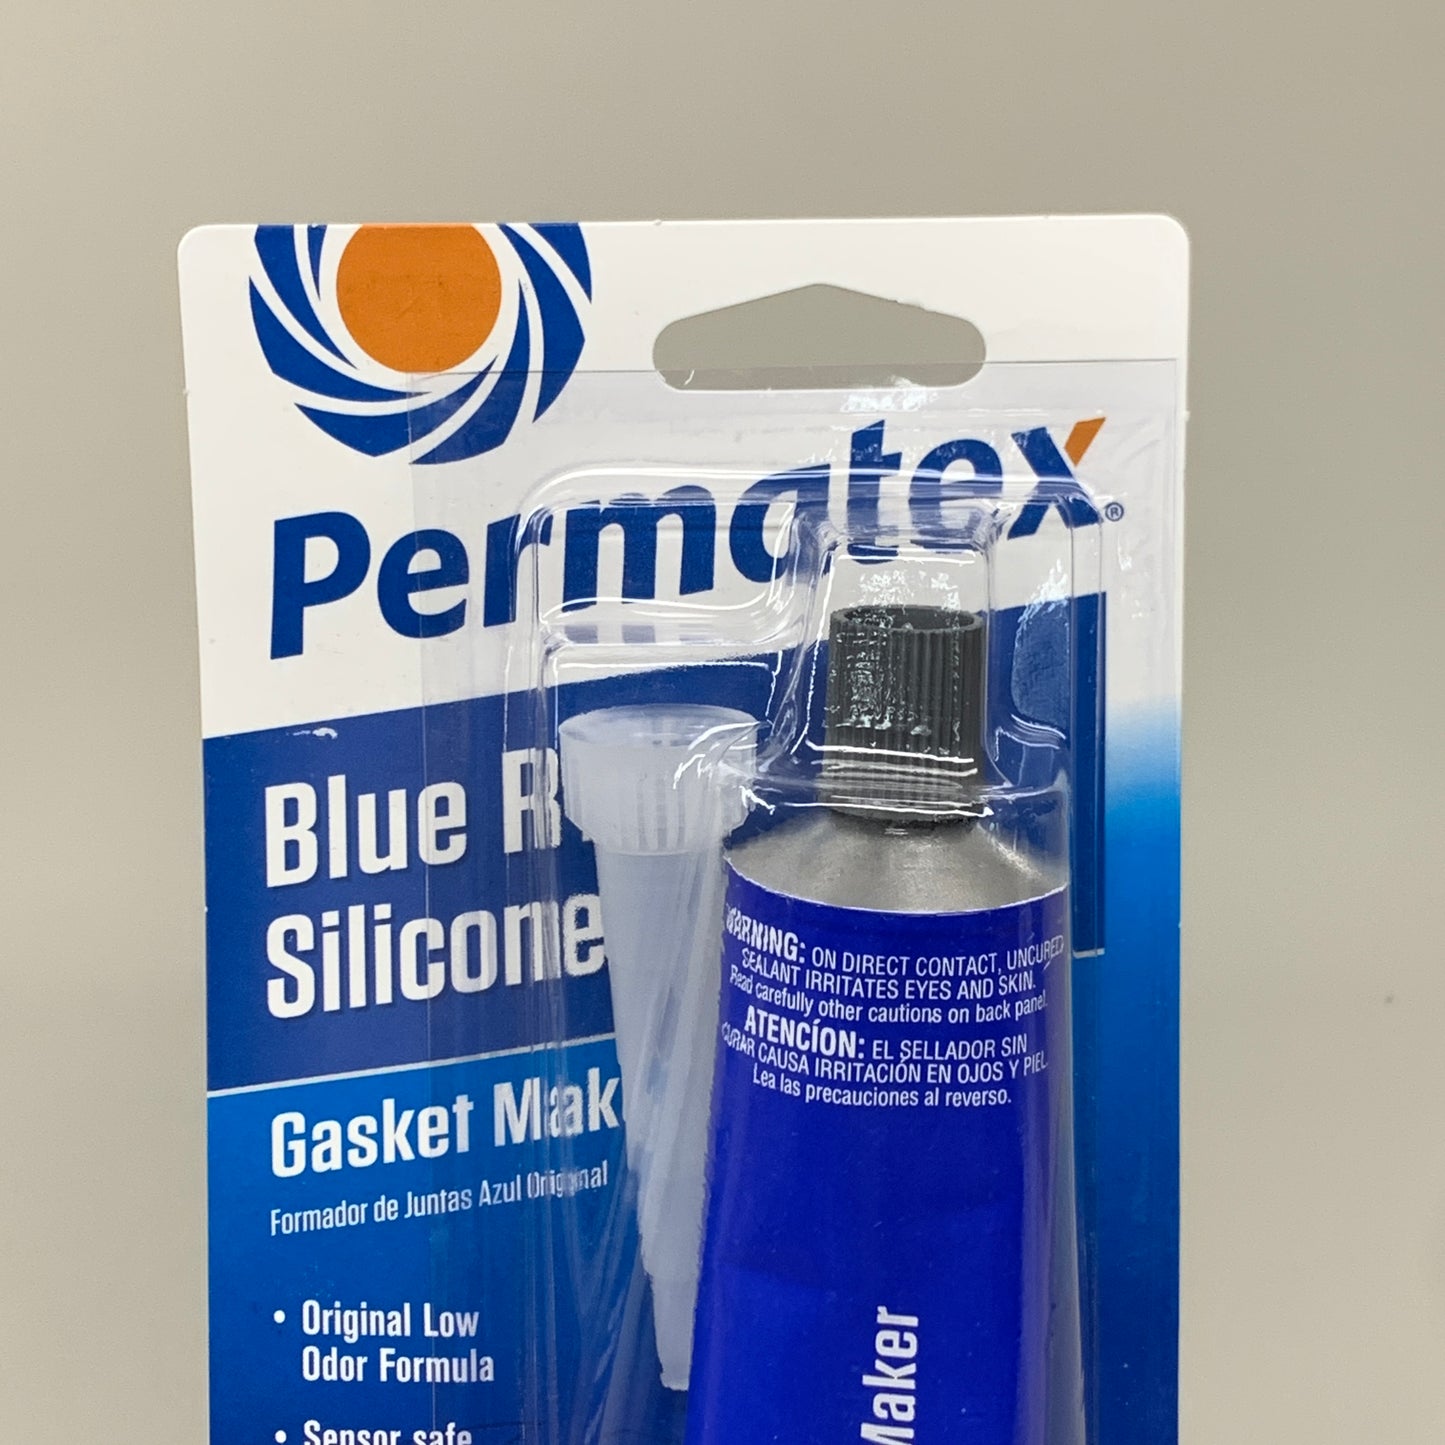 PERMATEX Blue RTV Gasket Maker Low Odor Formula 3 oz 80022 (New)